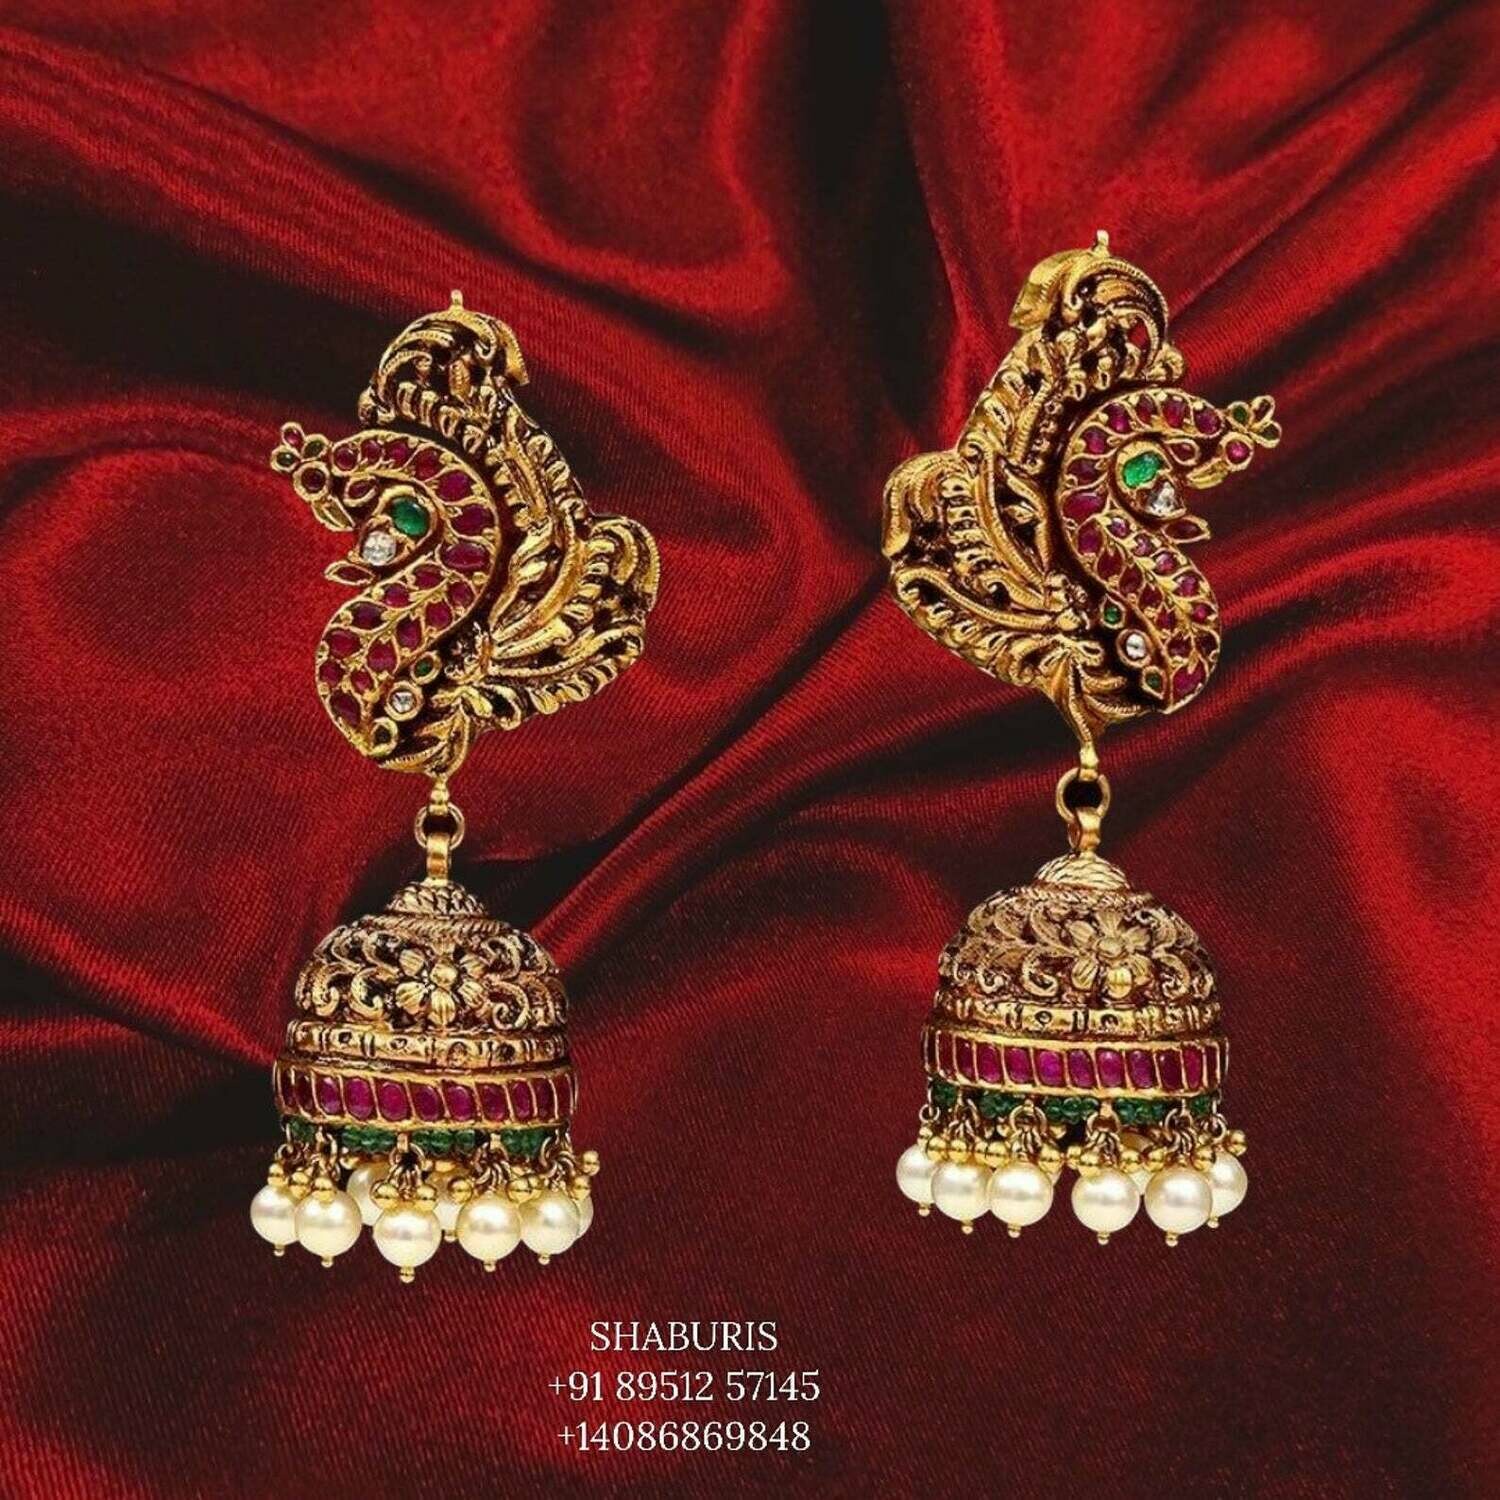 Latest Indian Jewelry,South Indian Jewelry,Pure silver peacock jhumka Indian,Indian Earrings,Indian Wedding Jewelry -NIHIRA-SHABURIS